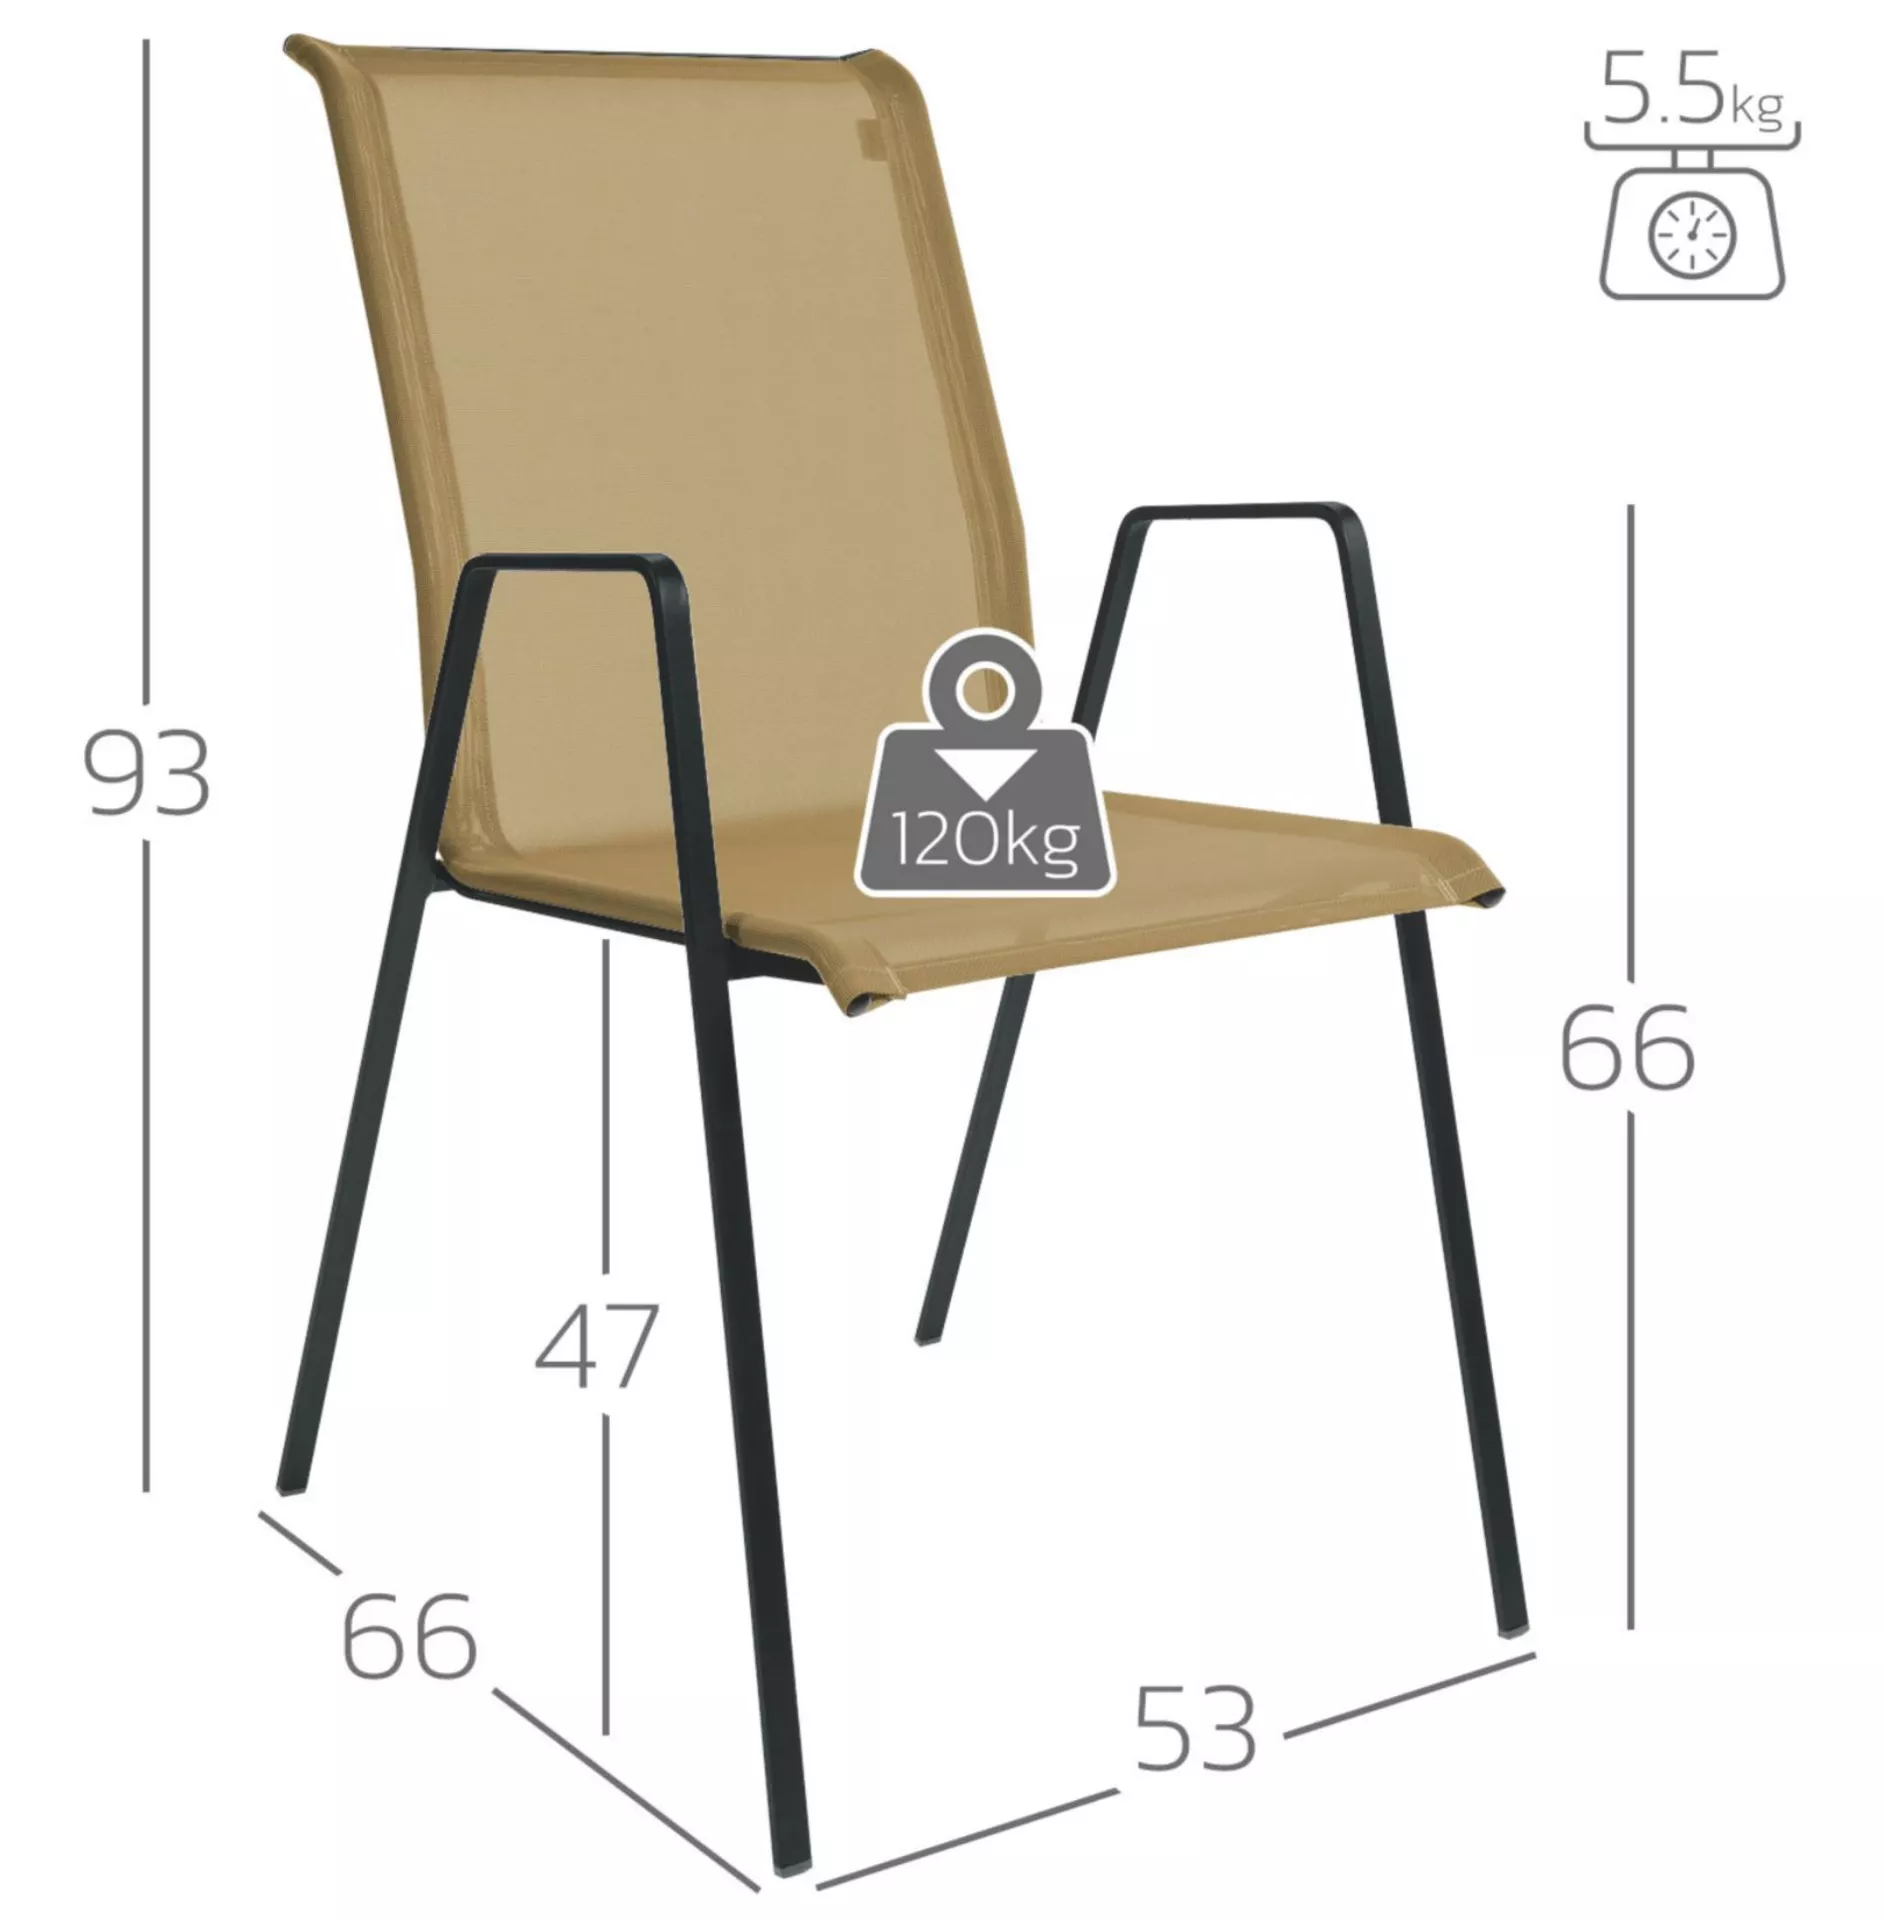 Matten-Sessel Luzern Schaffner / Farbe: Sand